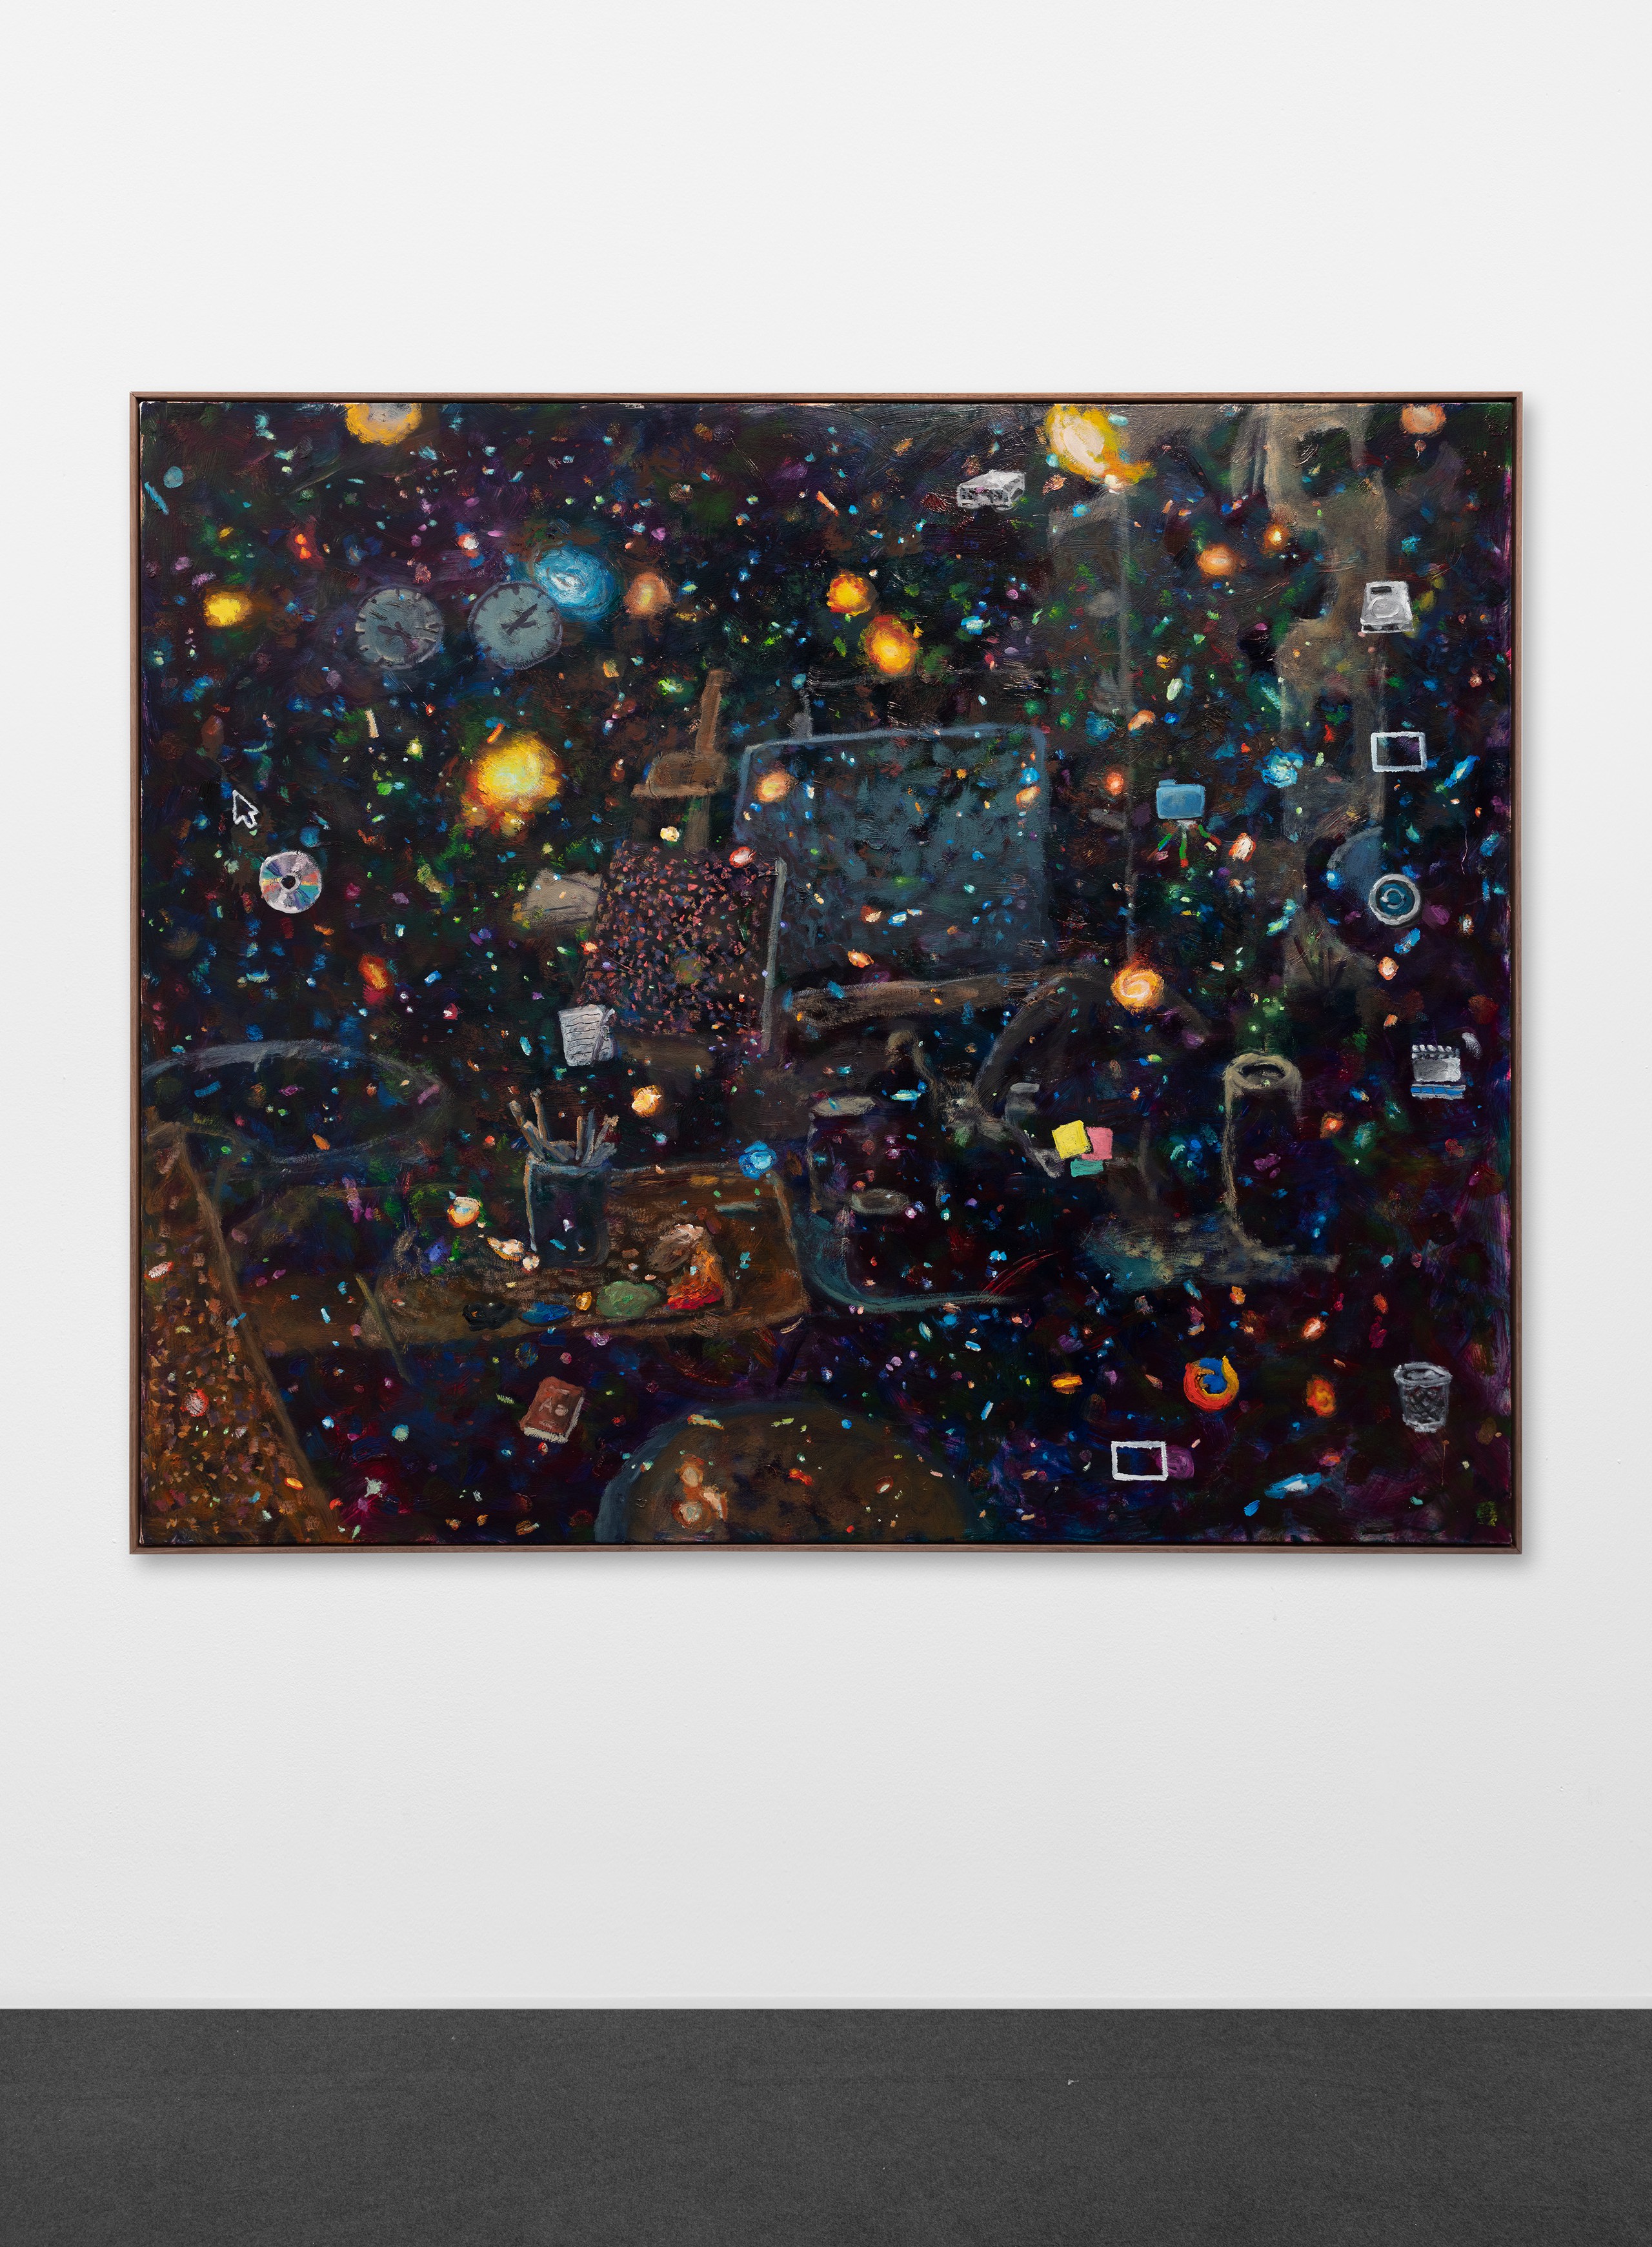 Trisha Baga, Studio, 2022, oil on canvas, 152.4 x 182.9 x 5.1 cm, 60 x 72 x 2 in